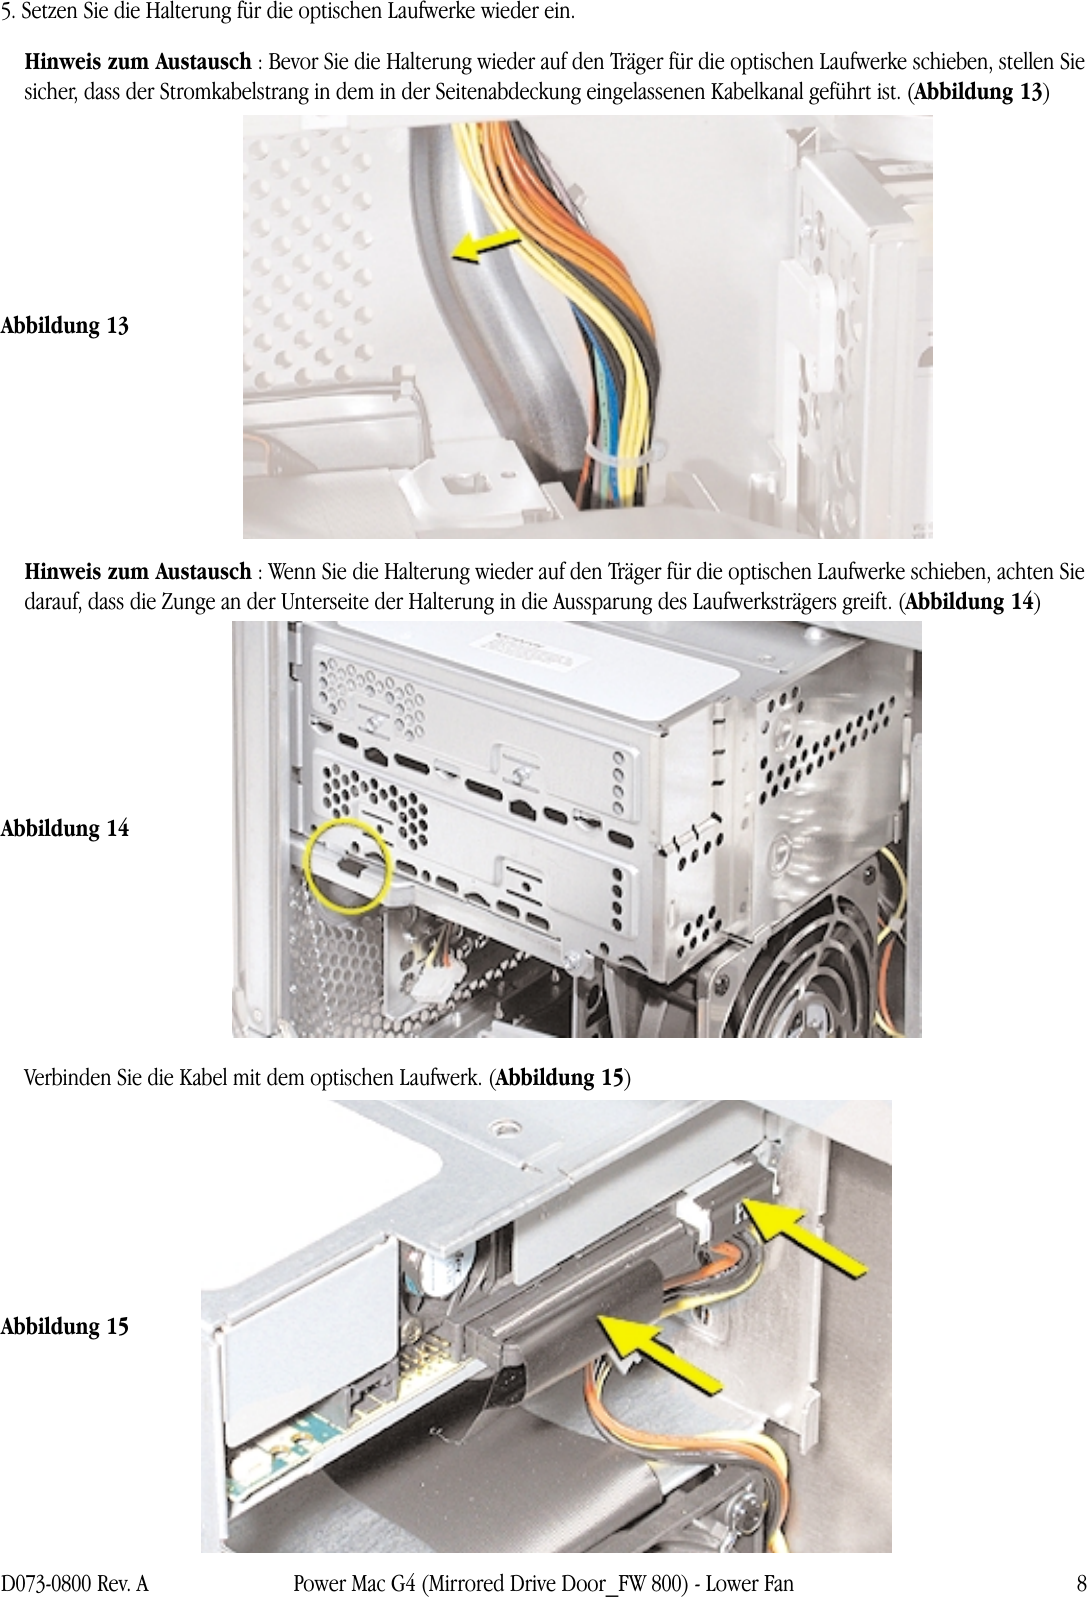 Page 8 of 10 - Apple Power Mac G4 (Mirrored Drive Doors) Lower Fan User Manual Doors, Fire Wire 800) - Unterer Ventilator Anw Anweisungen Zum Aus- Und Einbau G4mdd-fw800-lowerfan